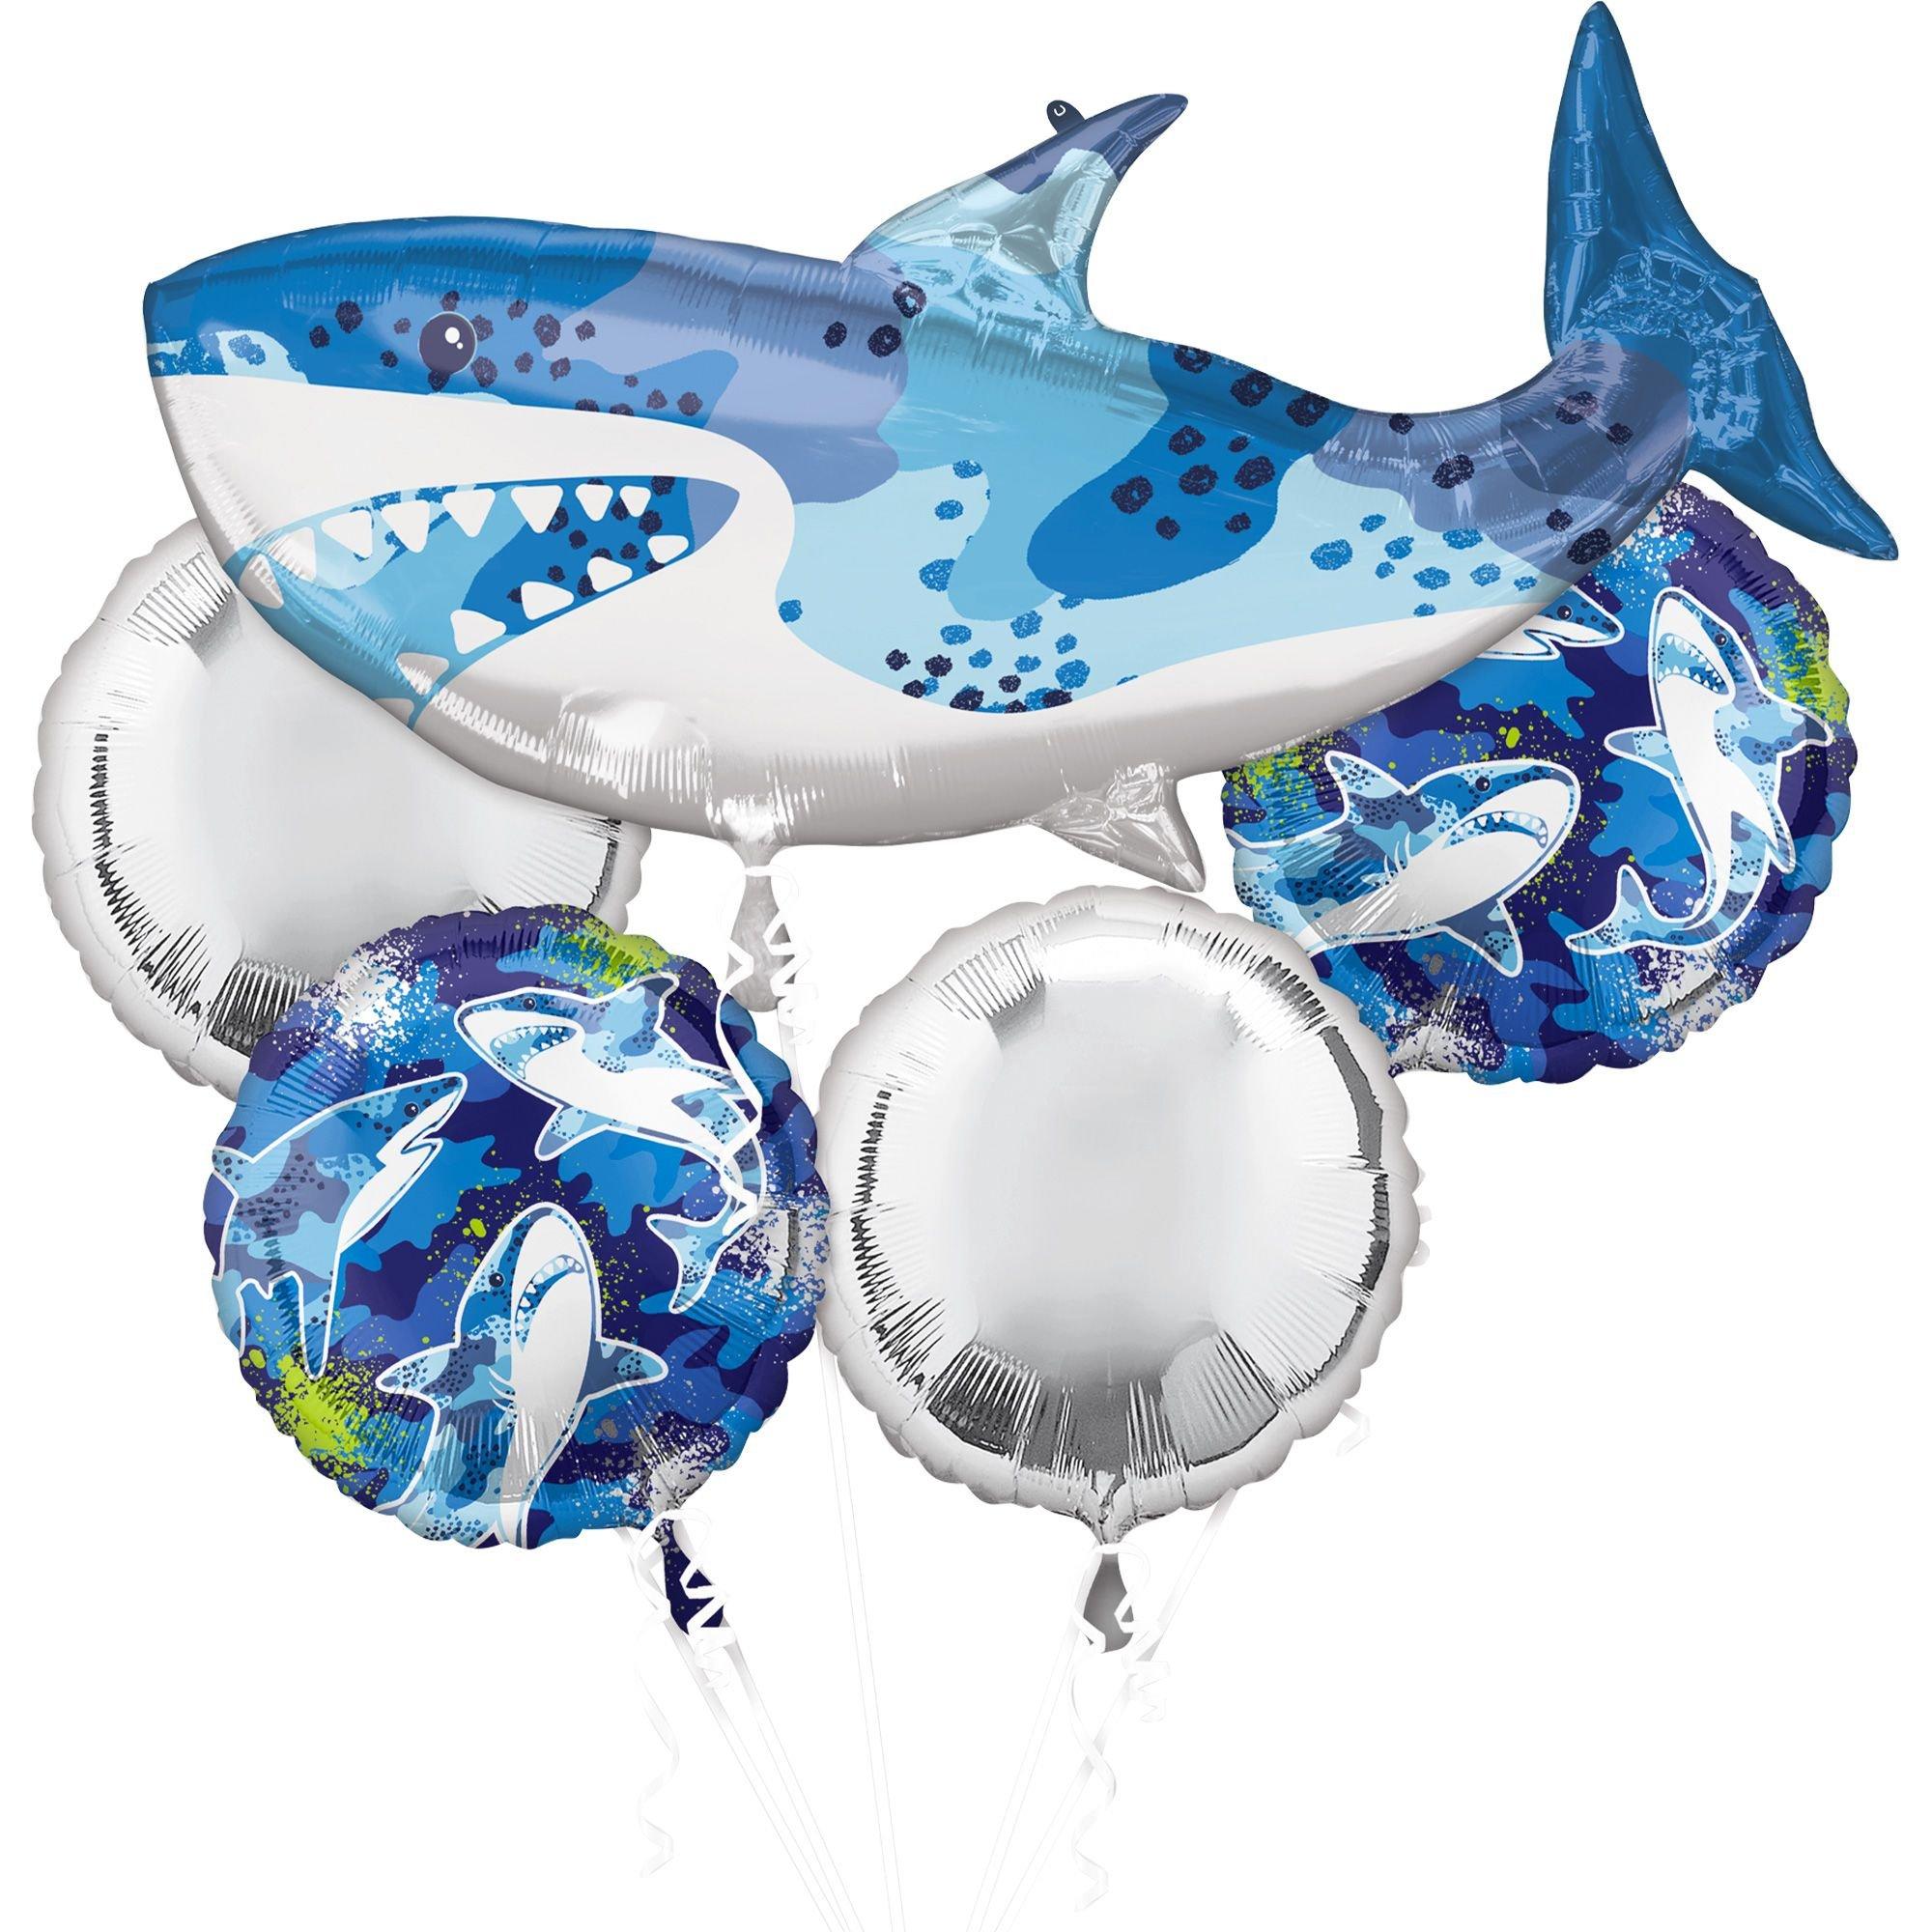 6 Pieces Shark Balloons, 38 Inch Large Shark Balloon Foil Balloons Shark  Party Decorations Fish Balloons for Ocean Theme Party Decor Wedding Decor